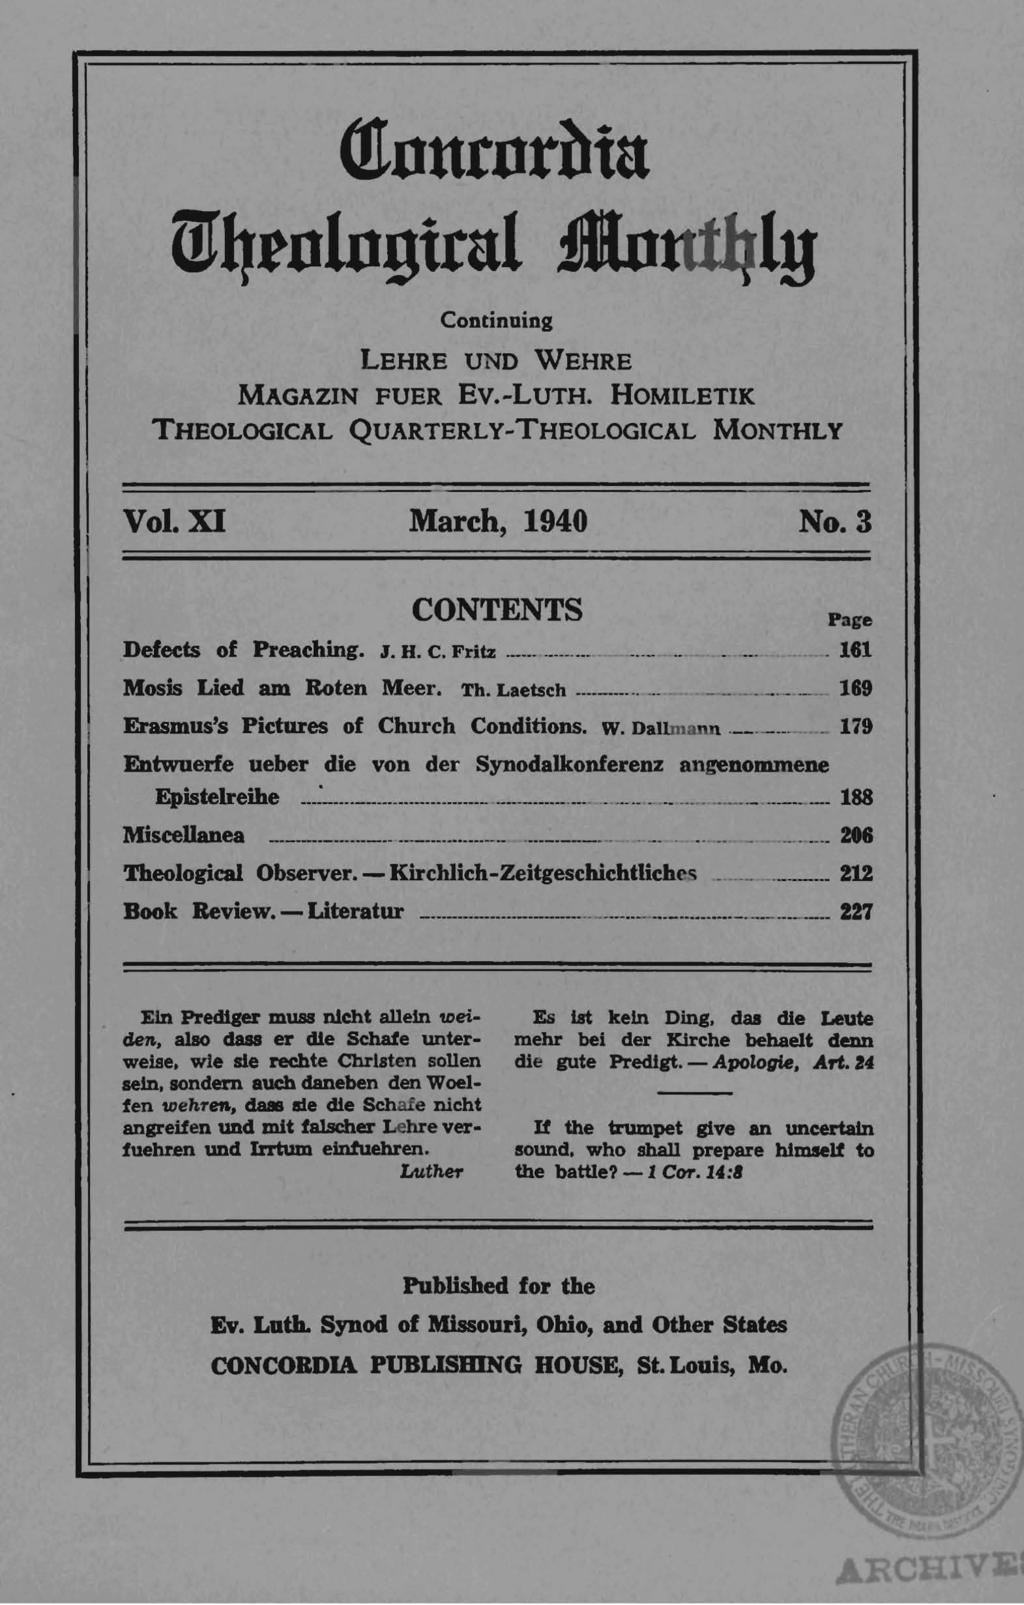 <ttnurnrbta UJ4rningtrai &tutljly Continuing LEHRE UND VVEHRE MAGAZIN FUER Ev.-LuTH. HOMILETIK THEOLOGICAL QUARTERLy-THEOLOGICAL MONTHLY Vol. XI March, 1940 CONTENTS Defects of Preaching. J. H. C. Fritz.